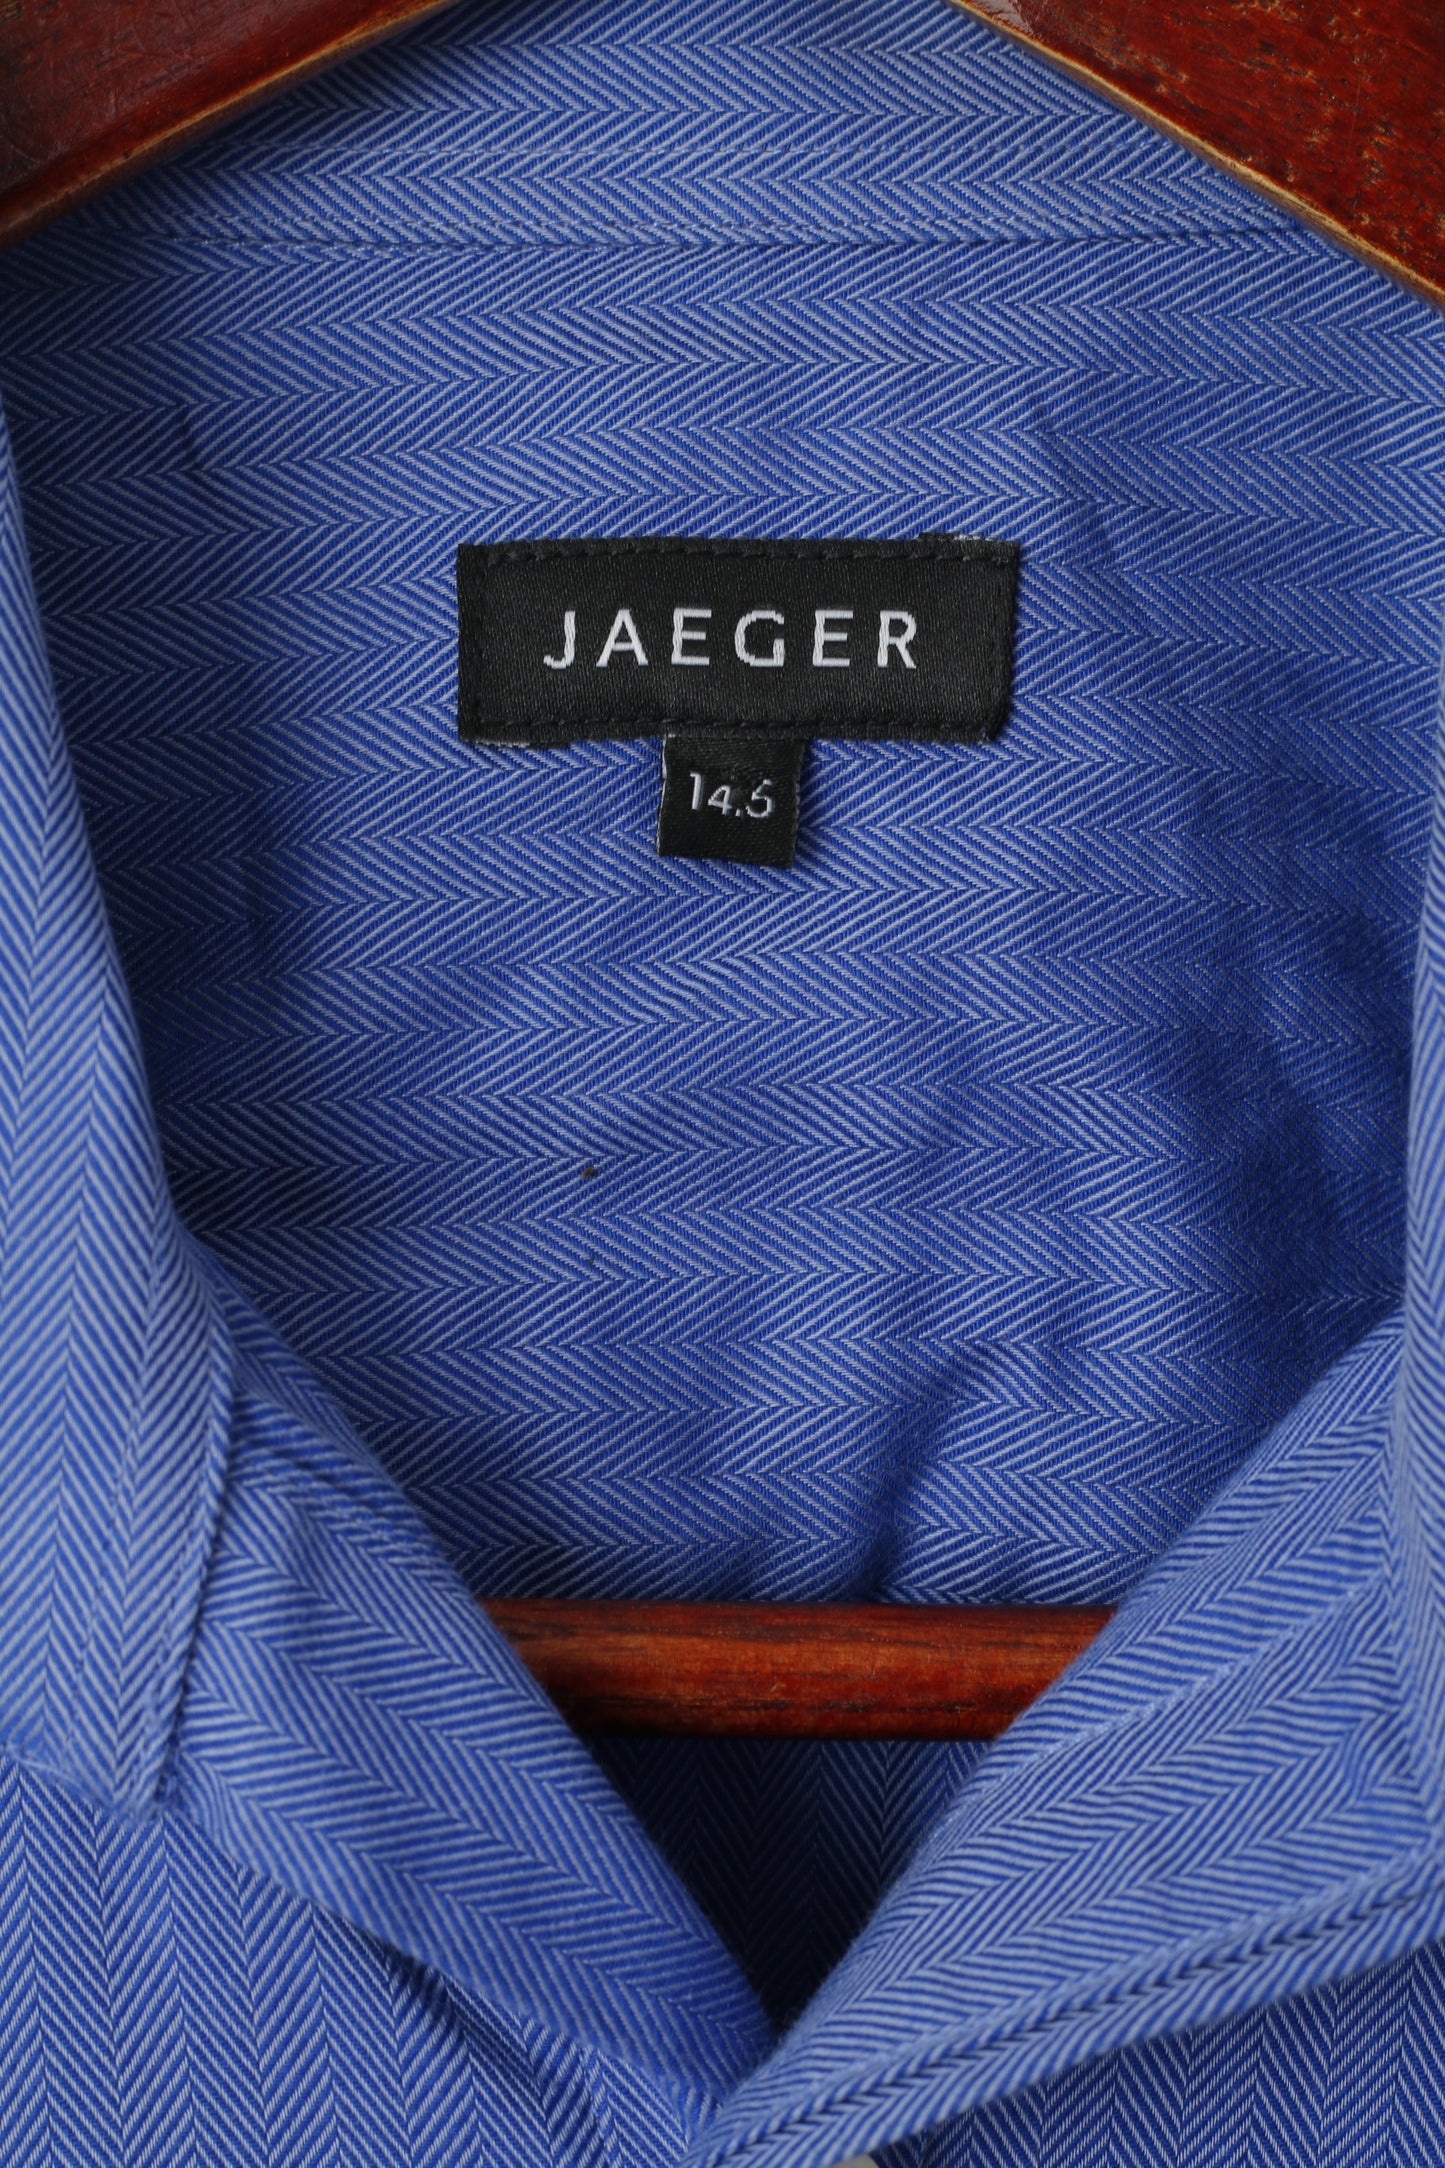 Jaeger Men 14.5 S Casual Shirt Blue Striped Cotton Long Sleeve Cufflinks Elegant Top